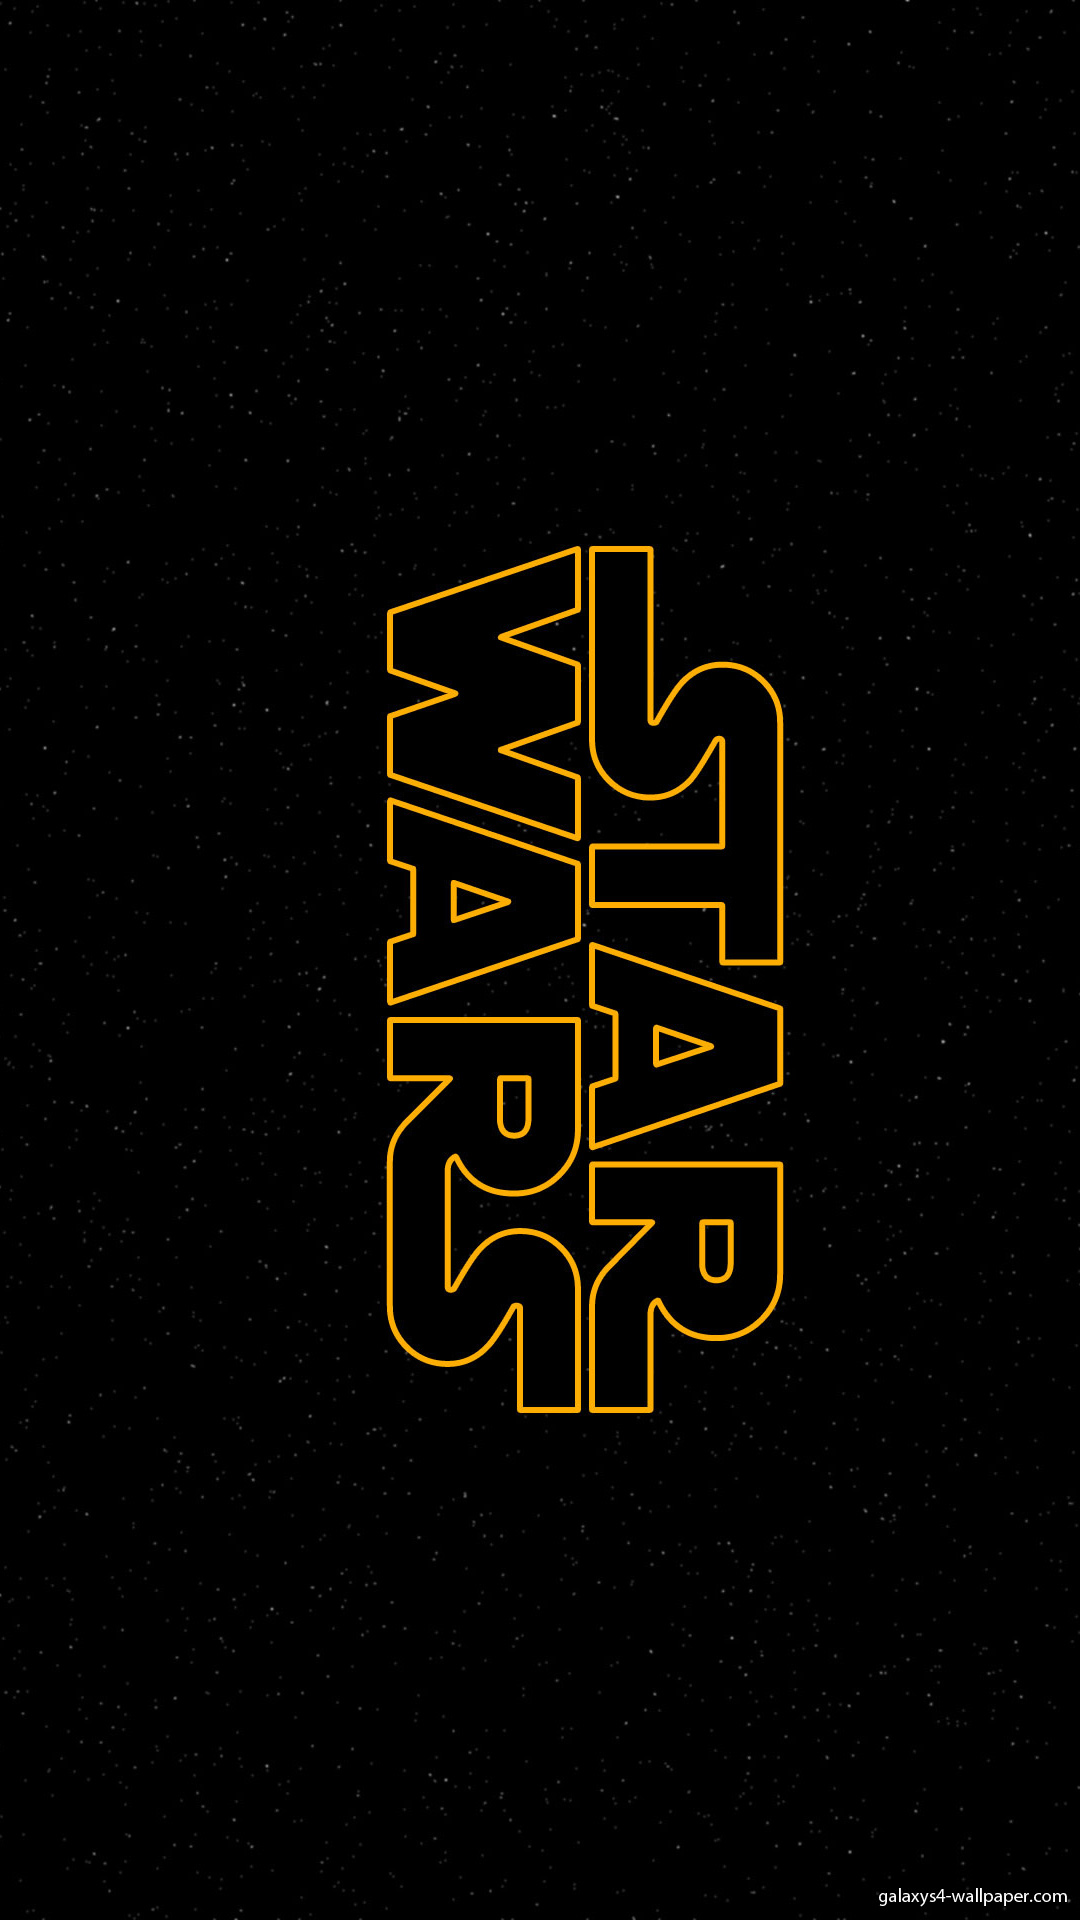 Galaxy S4 Wallpaper Star Wars Photo And HD